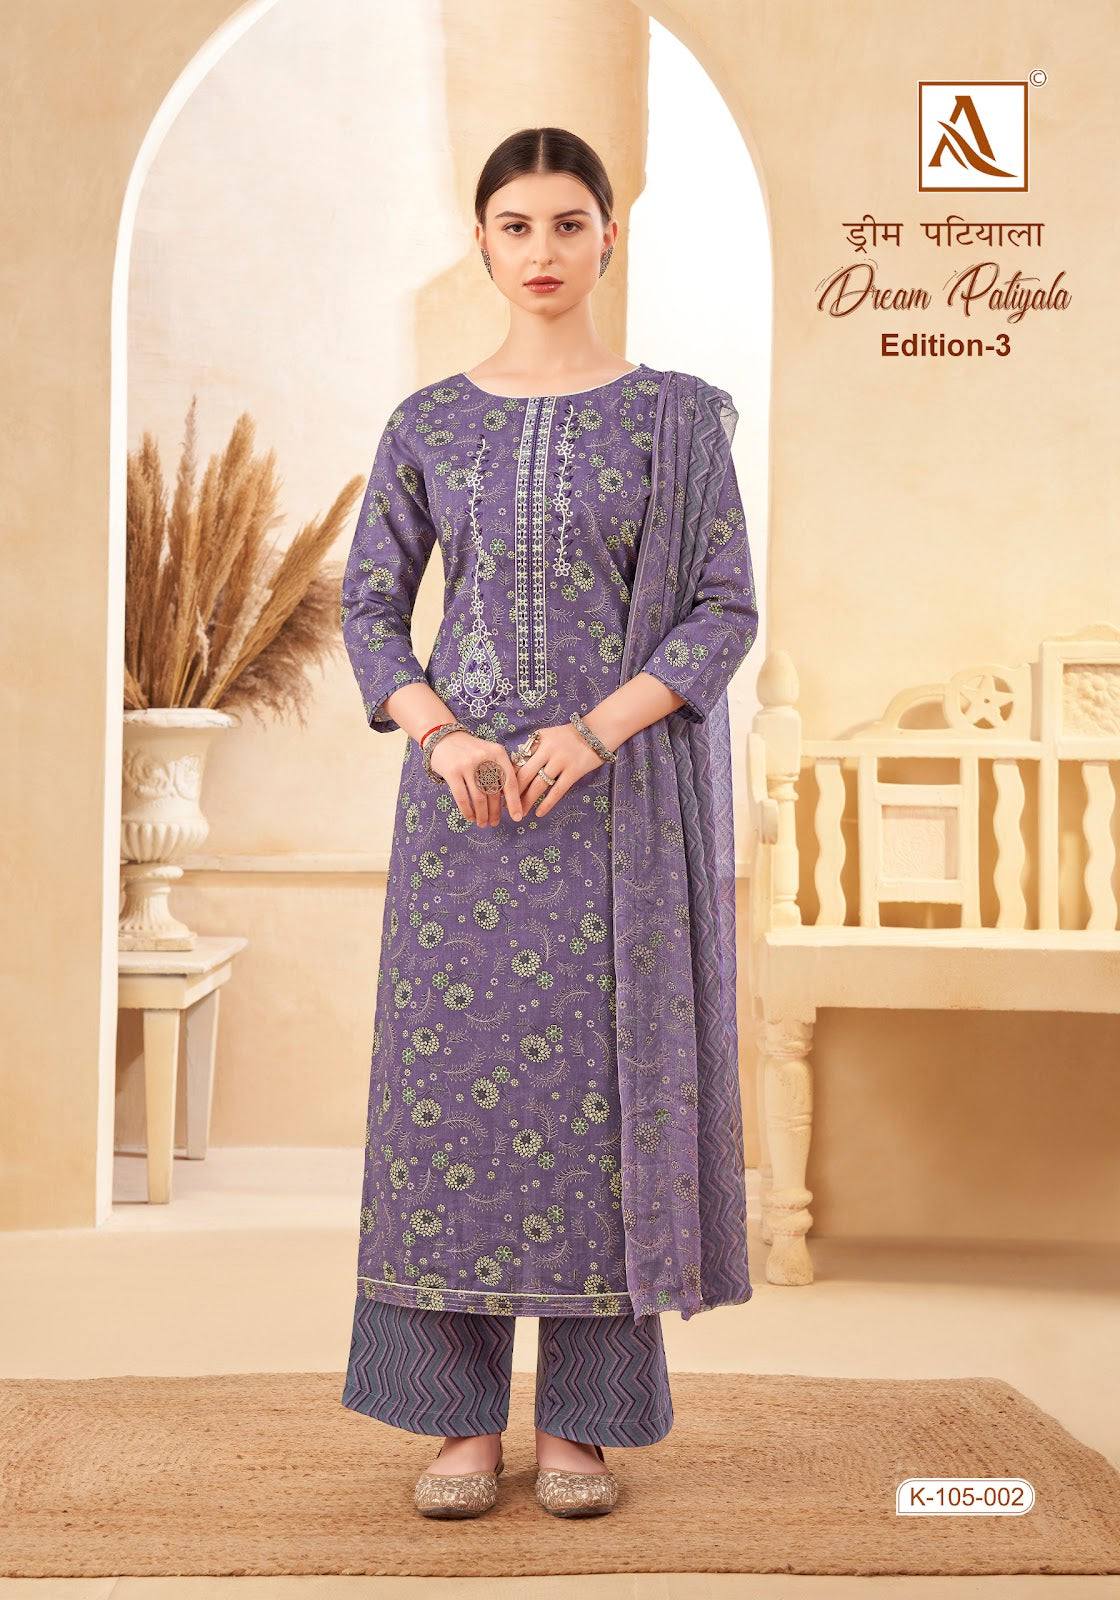 Dream Patiyala Edition 3 Alok Cambric Cotton Plazzo Style Suits Wholesale Price